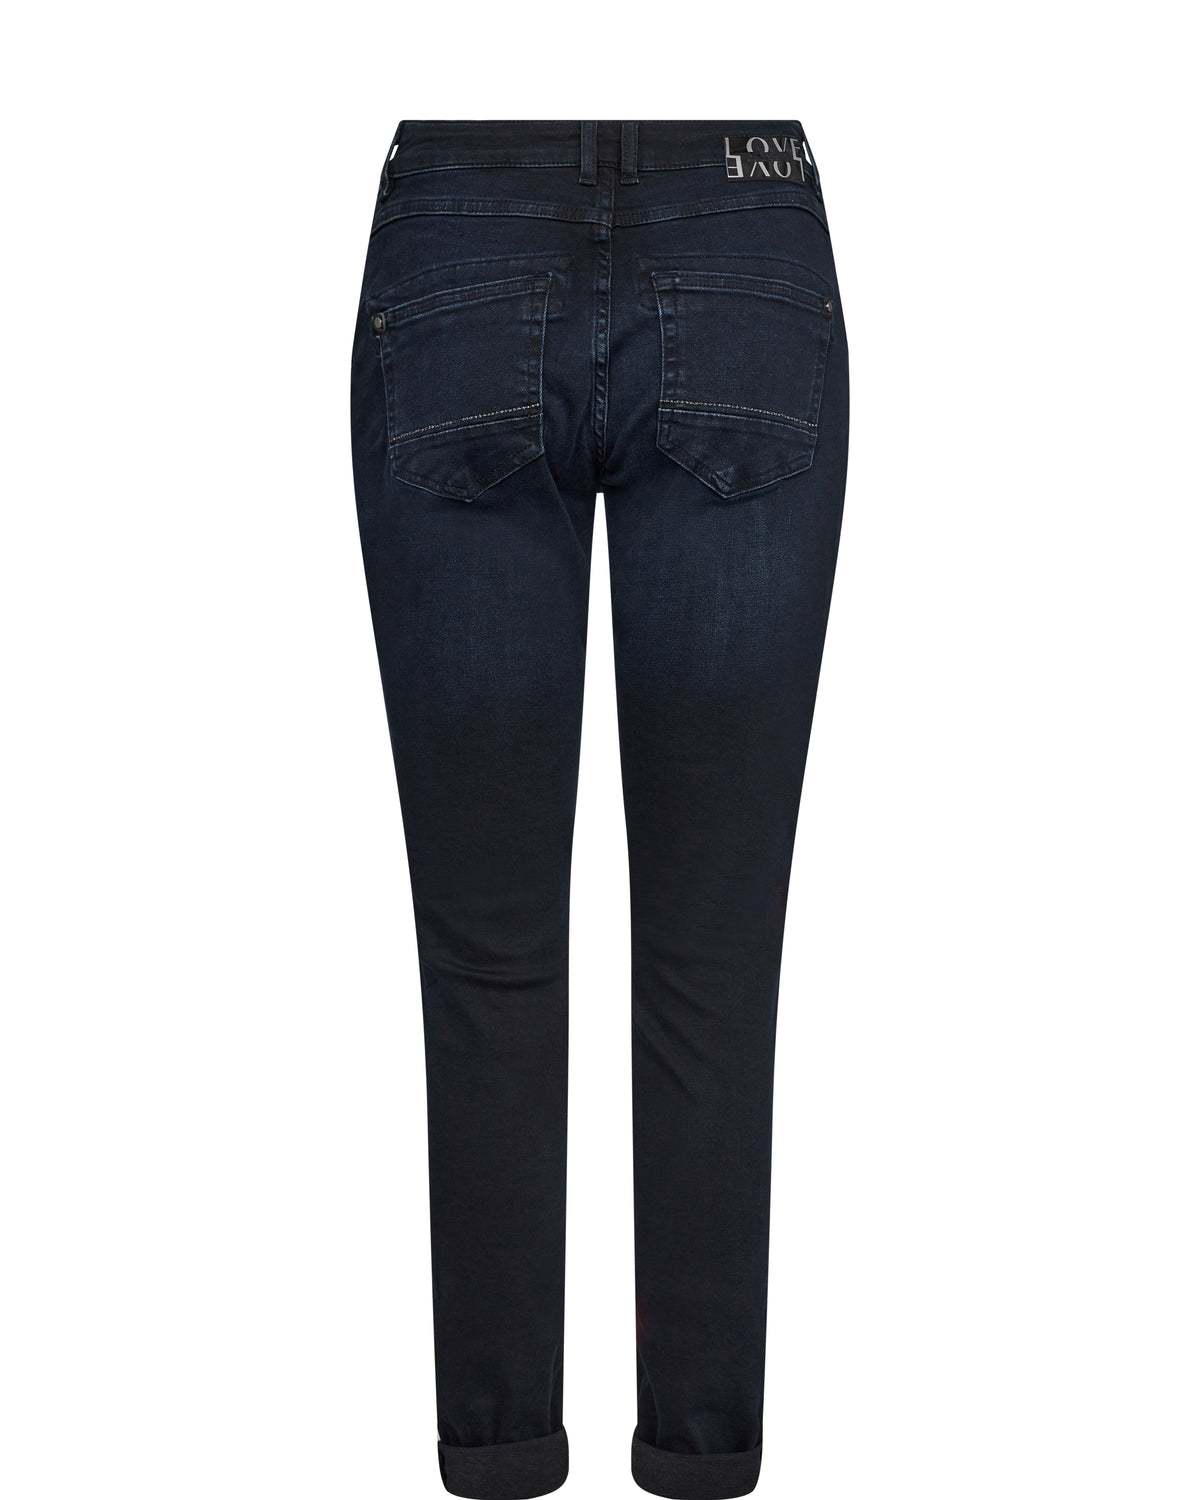 Dark blue wash slim skinny jeans with small silver metallic studs on pockets